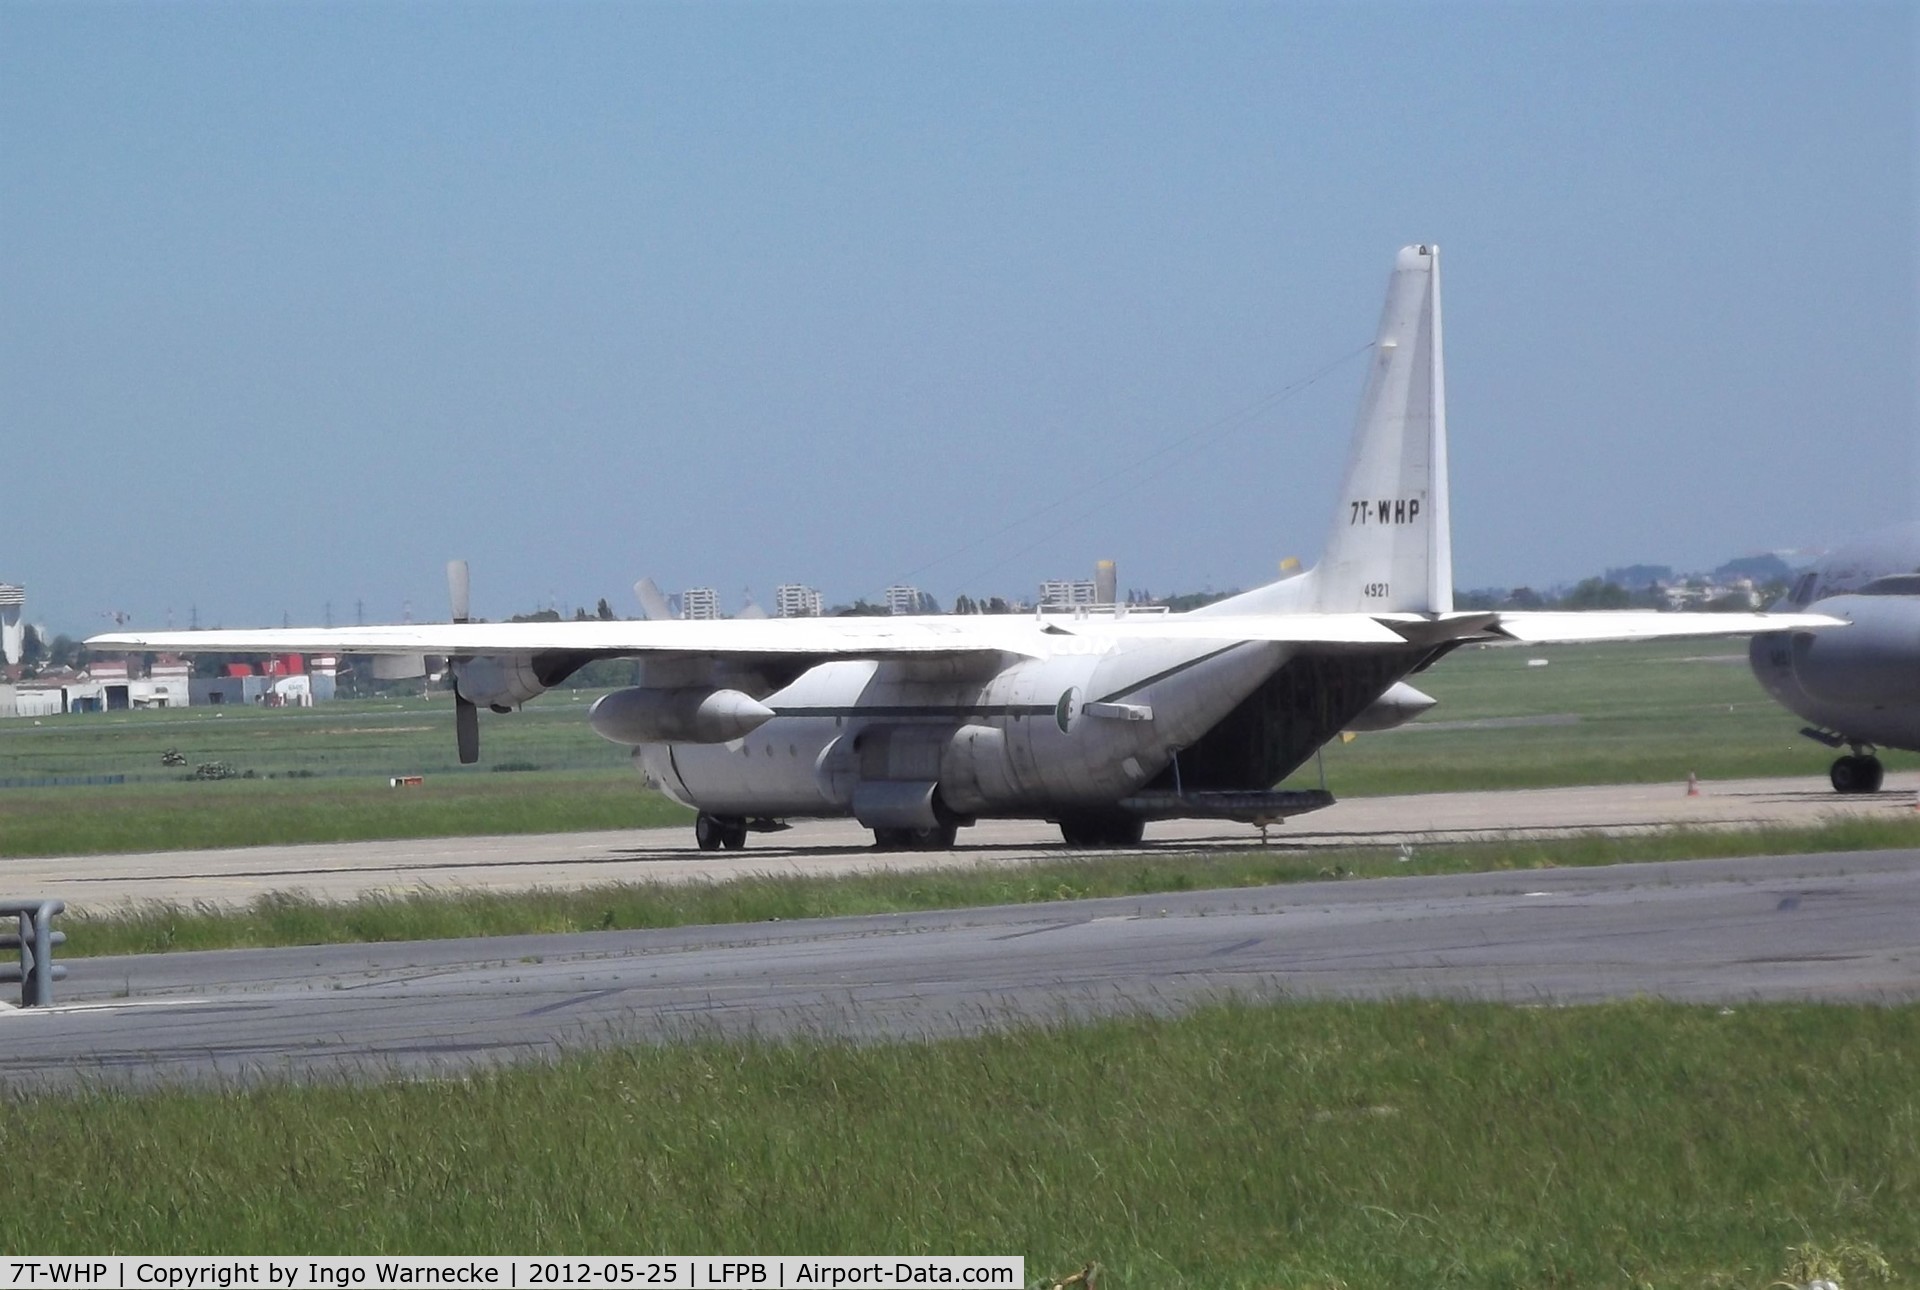 7T-WHP, 1982 Lockheed C-130H-30 Hercules C/N 382-4921, Lockheed C-130H of the Algerian Air Force at Paris/Le Bourget airport